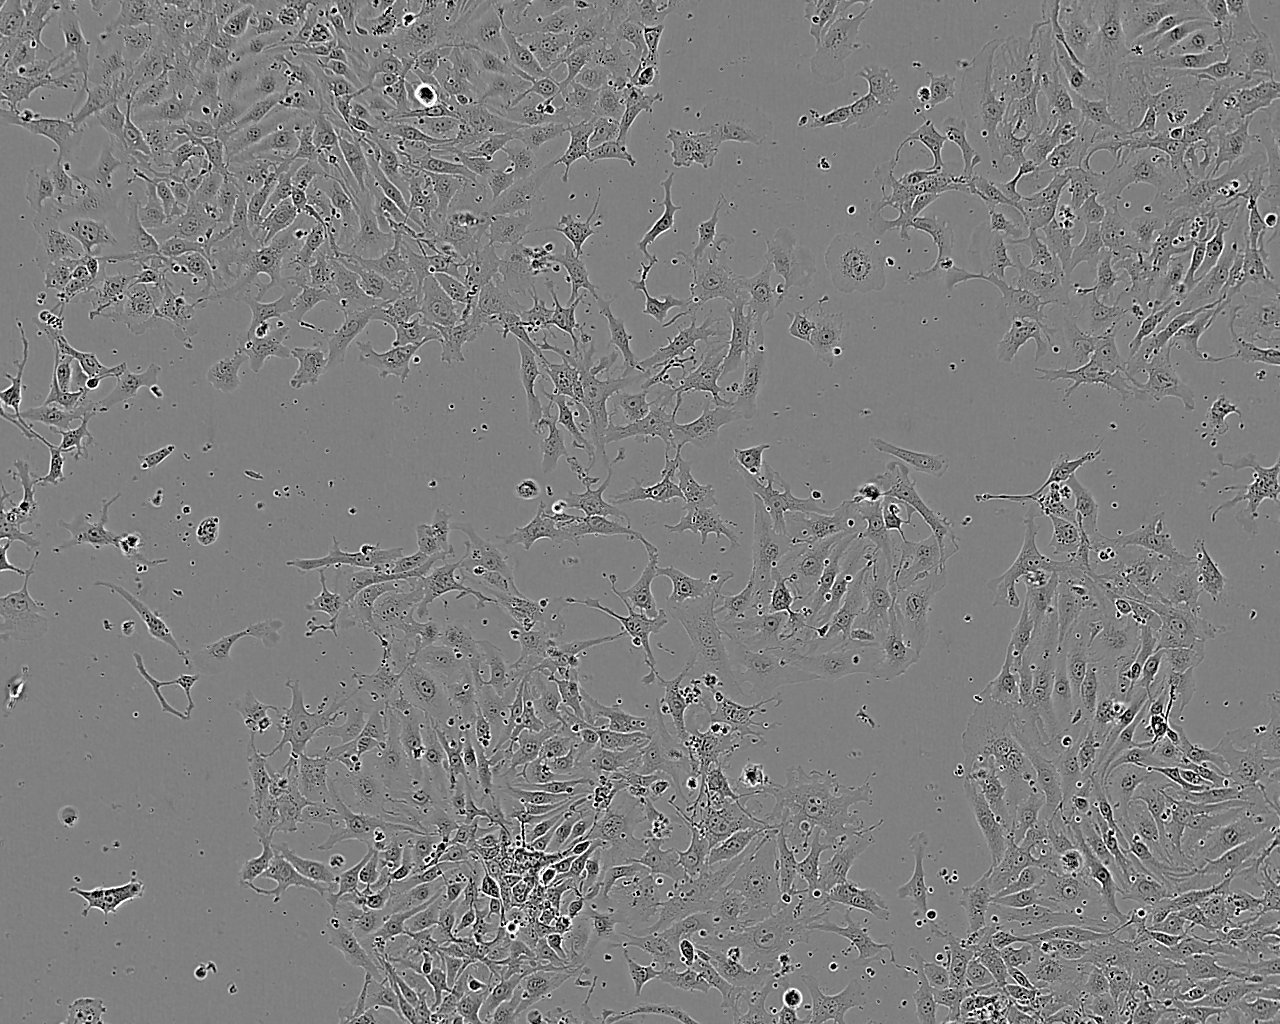 XWLC-05 epithelioid cells人肺腺癌细胞系,XWLC-05 epithelioid cells